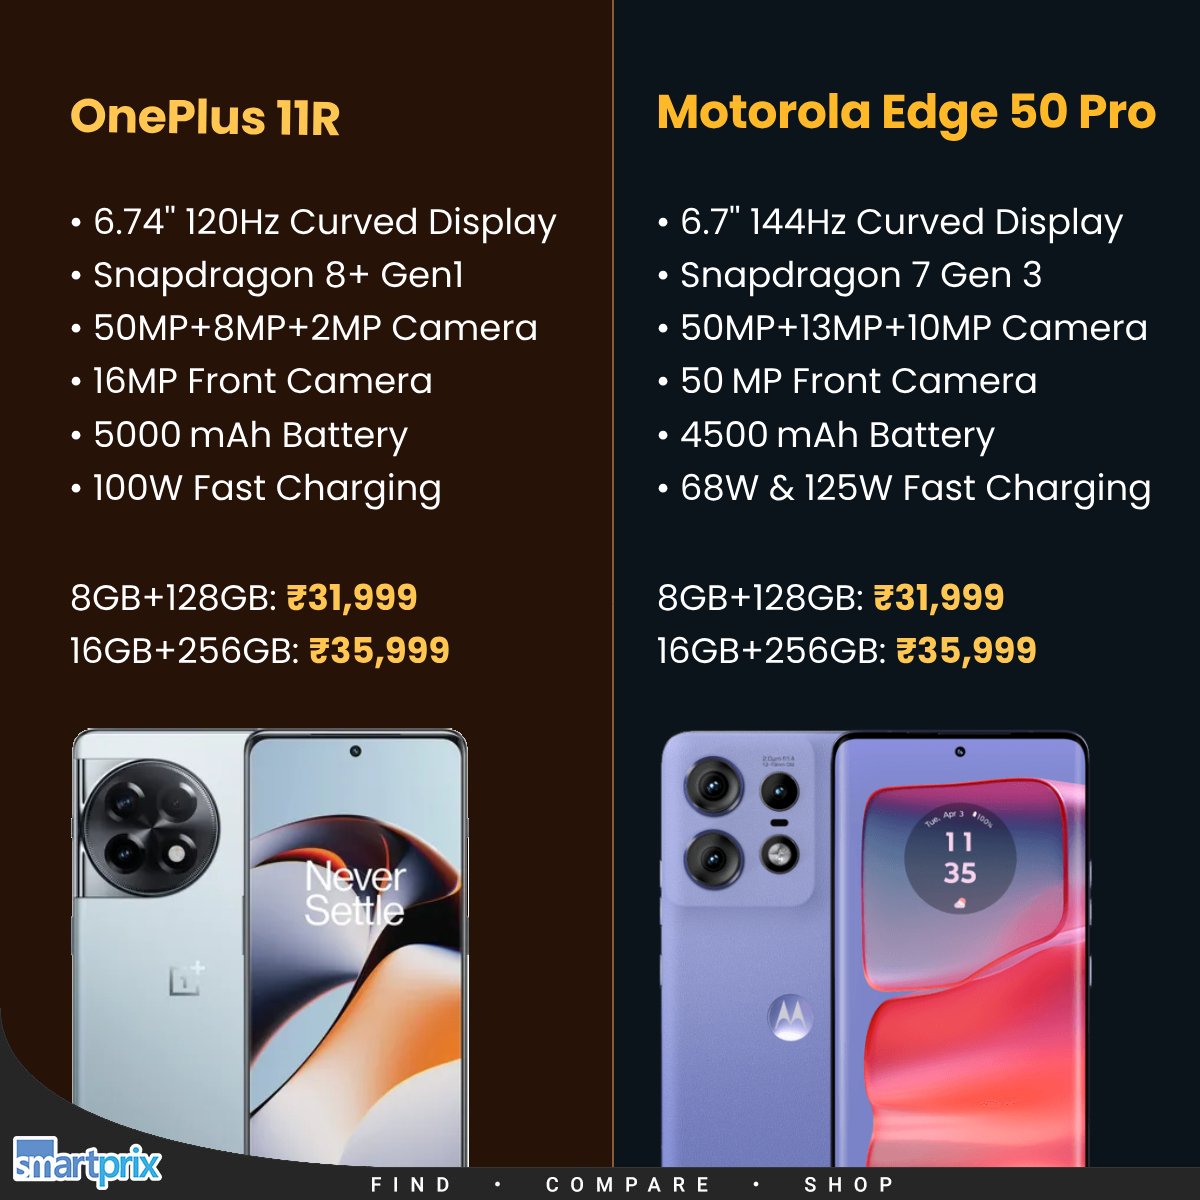 OnePlus 11R vs Motorola Edge 50 Pro: Which one would you consider? smpx.to/2XeEWn

#OnePlus #OnePlus11R #Motorola #MotorolaEdge50Pro